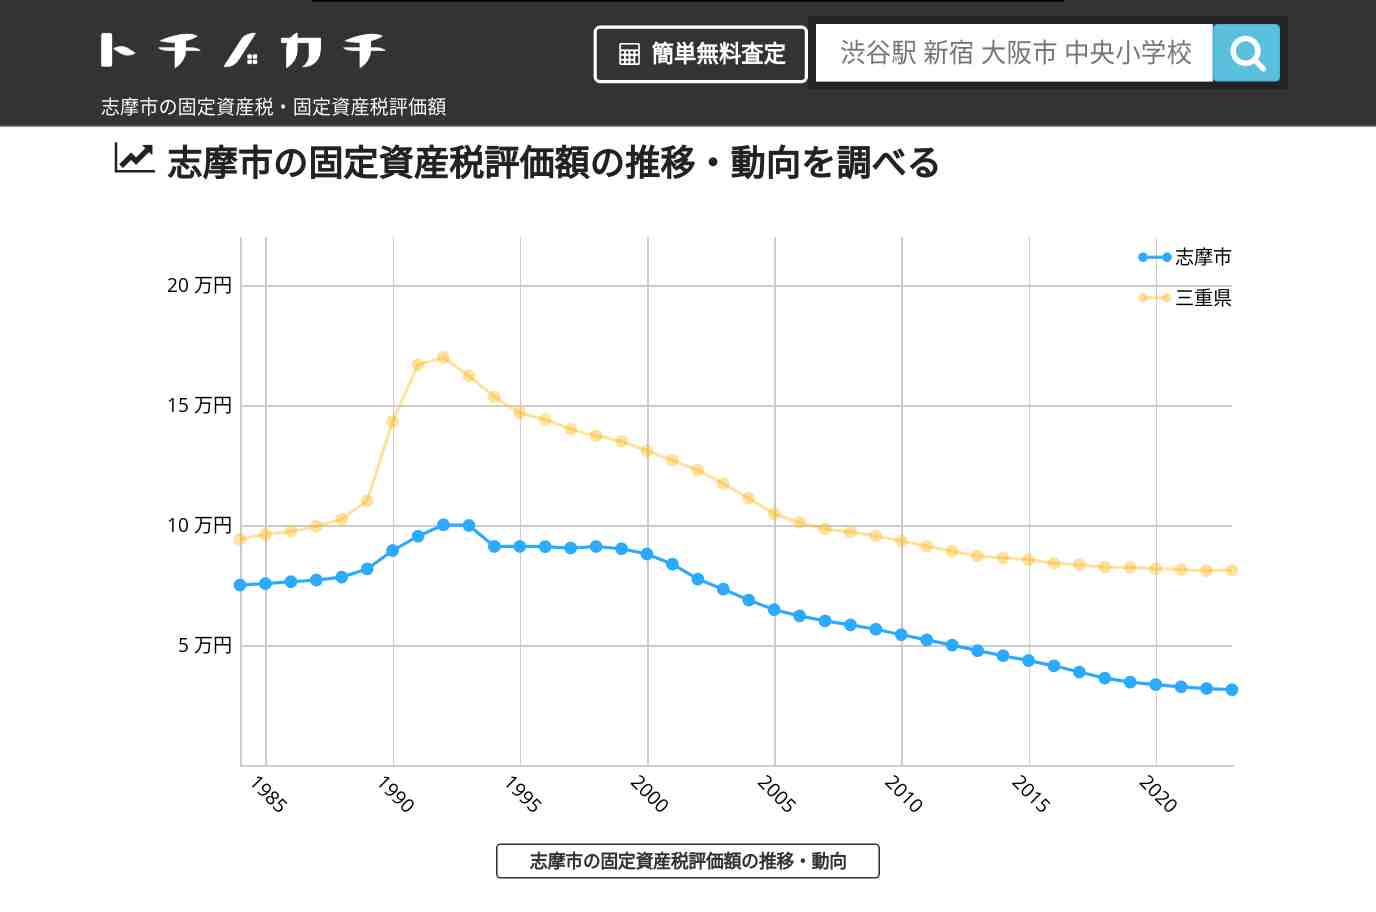 和具中学校(三重県 志摩市)周辺の固定資産税・固定資産税評価額 | トチノカチ